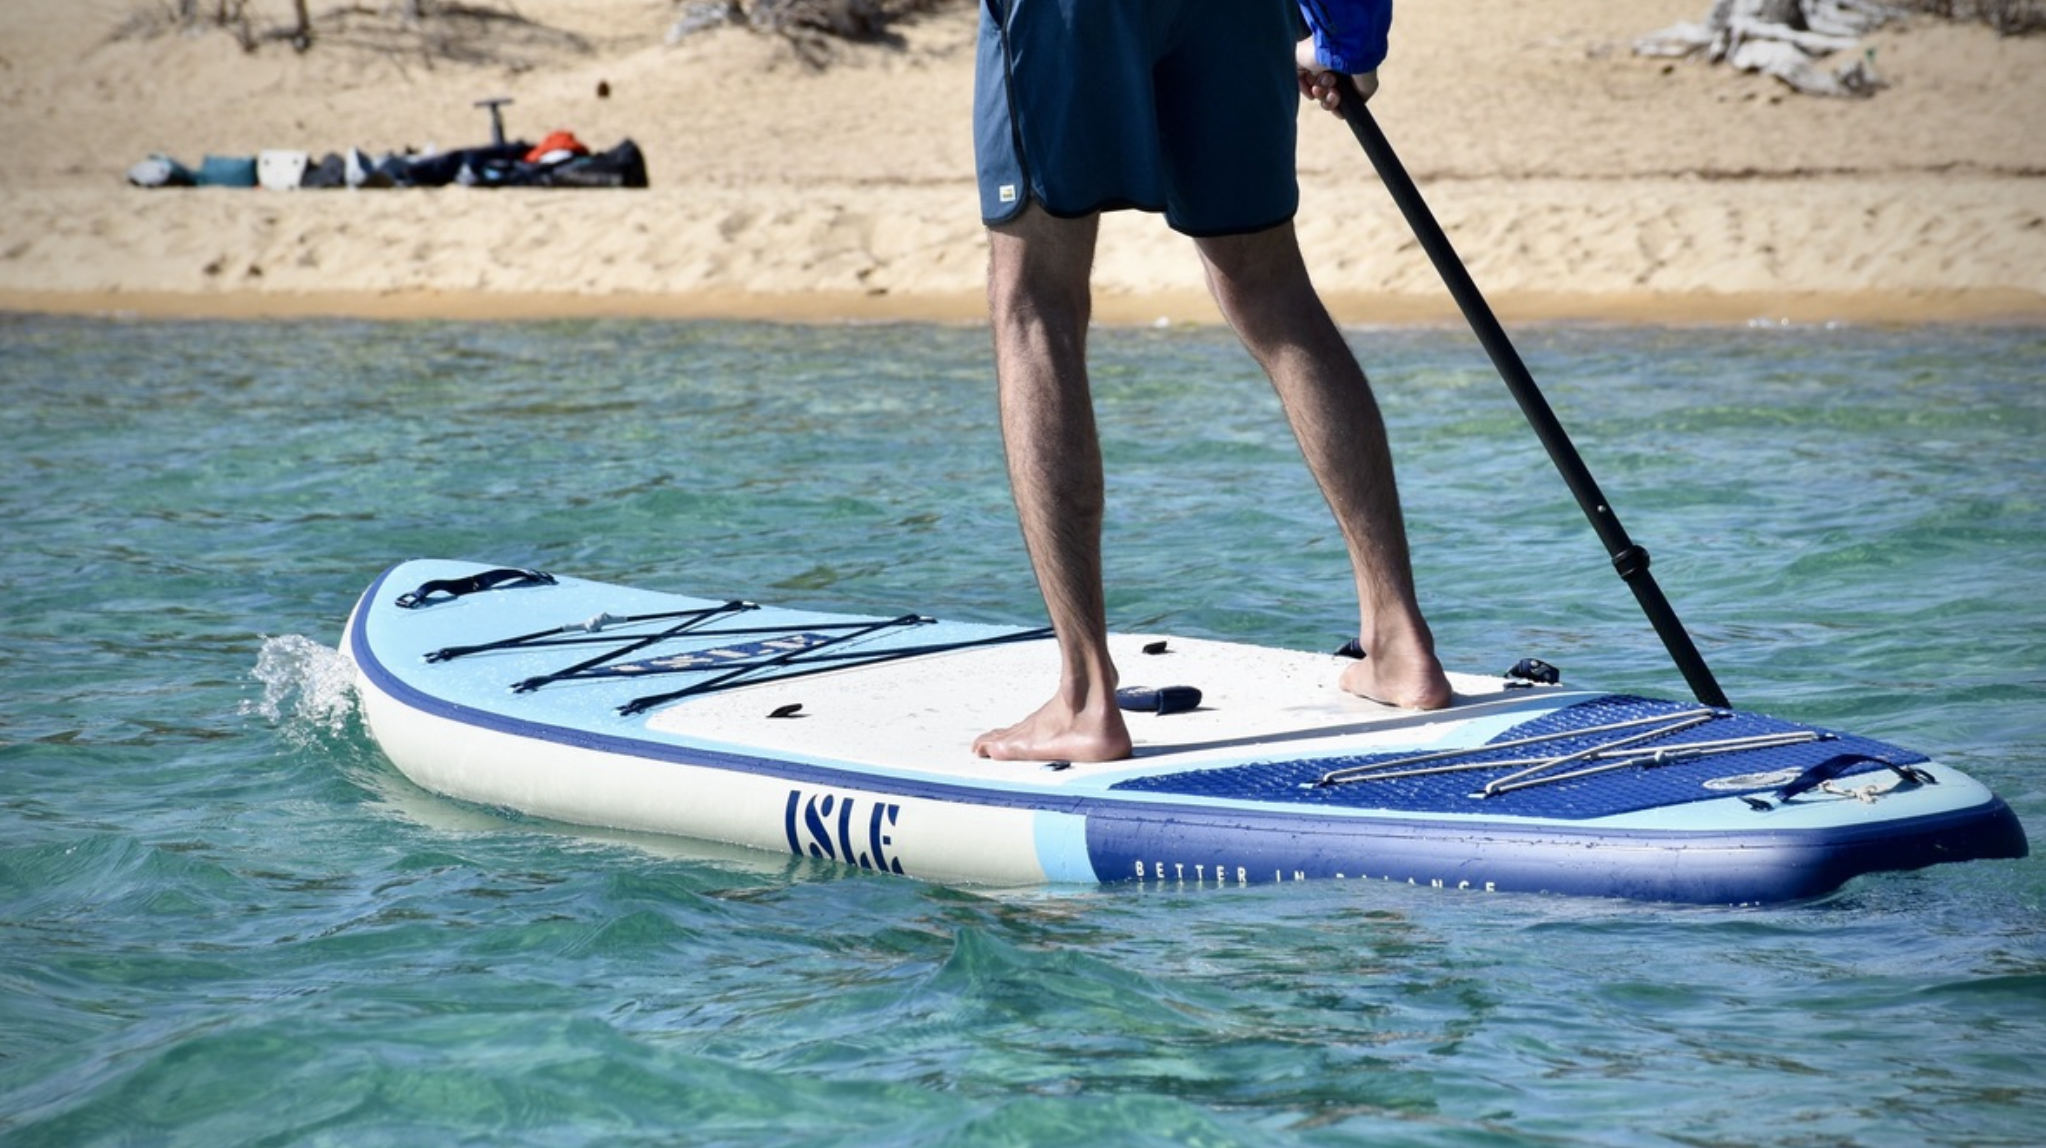 Isle Explorer 2.0 paddle board